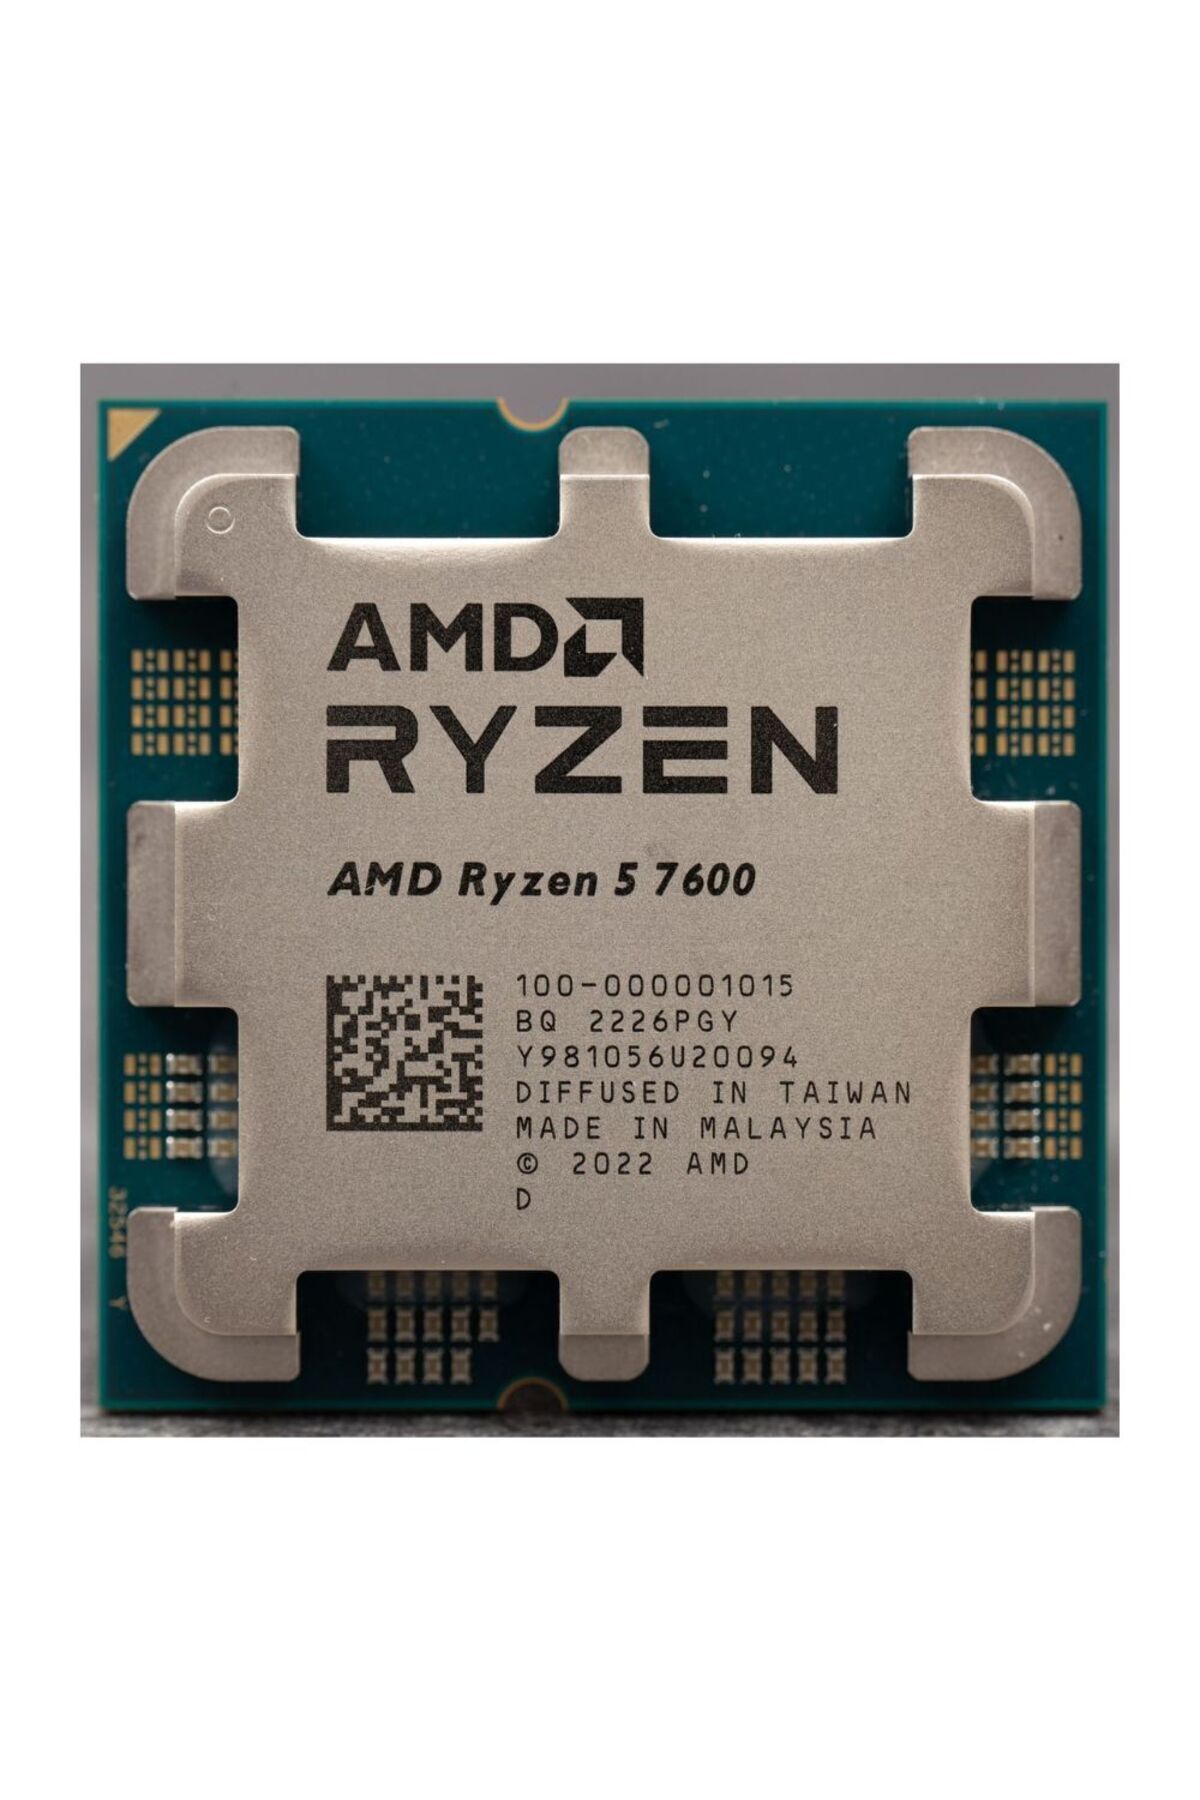 Amd Ryzen 5 7600 3.8GHz (Turbo 5.1GHz) 6 Core 12 Threads 32MB Cache AM5 İşlemci - Tray